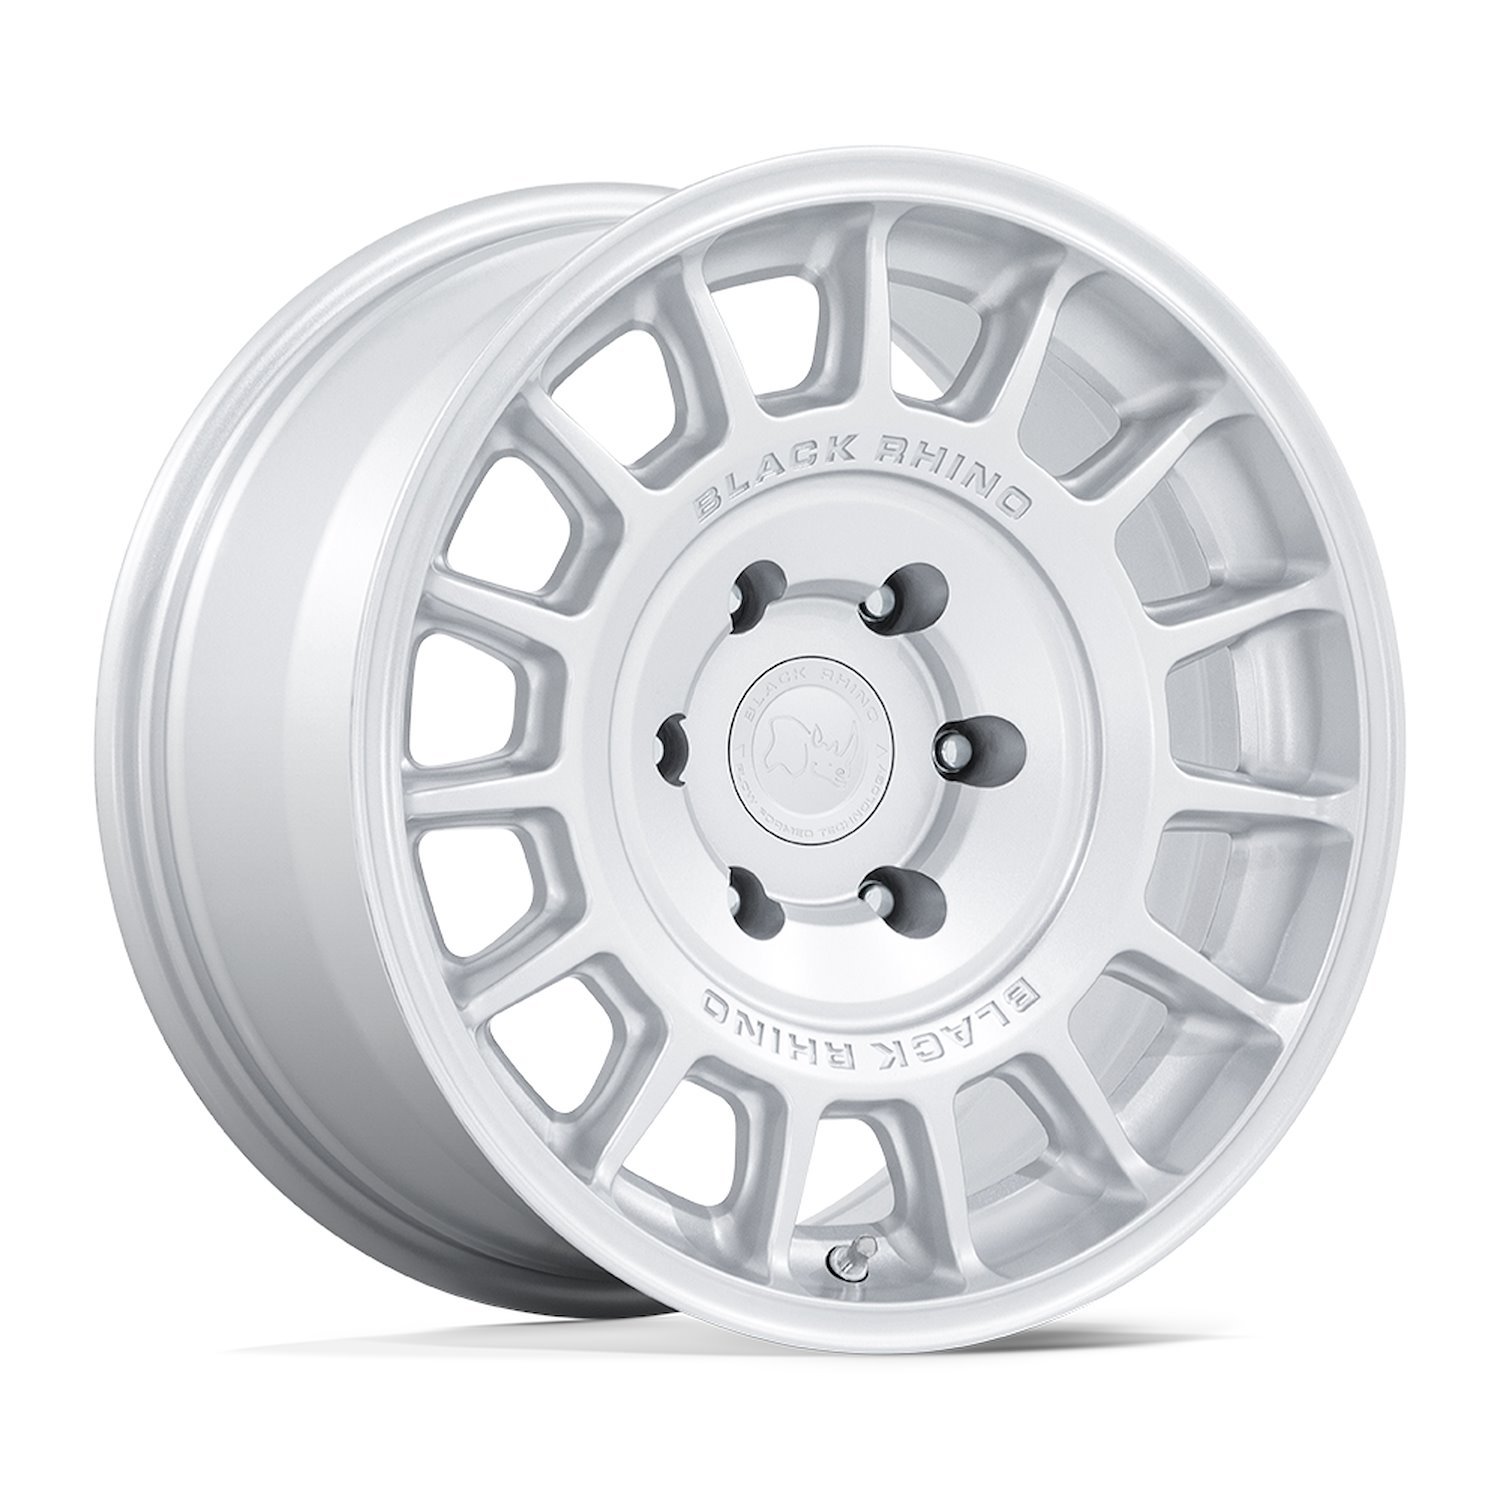 BR015SX15705115 BR015 VOLL Wheel [Size: 15" x 7"] Hyper Silver